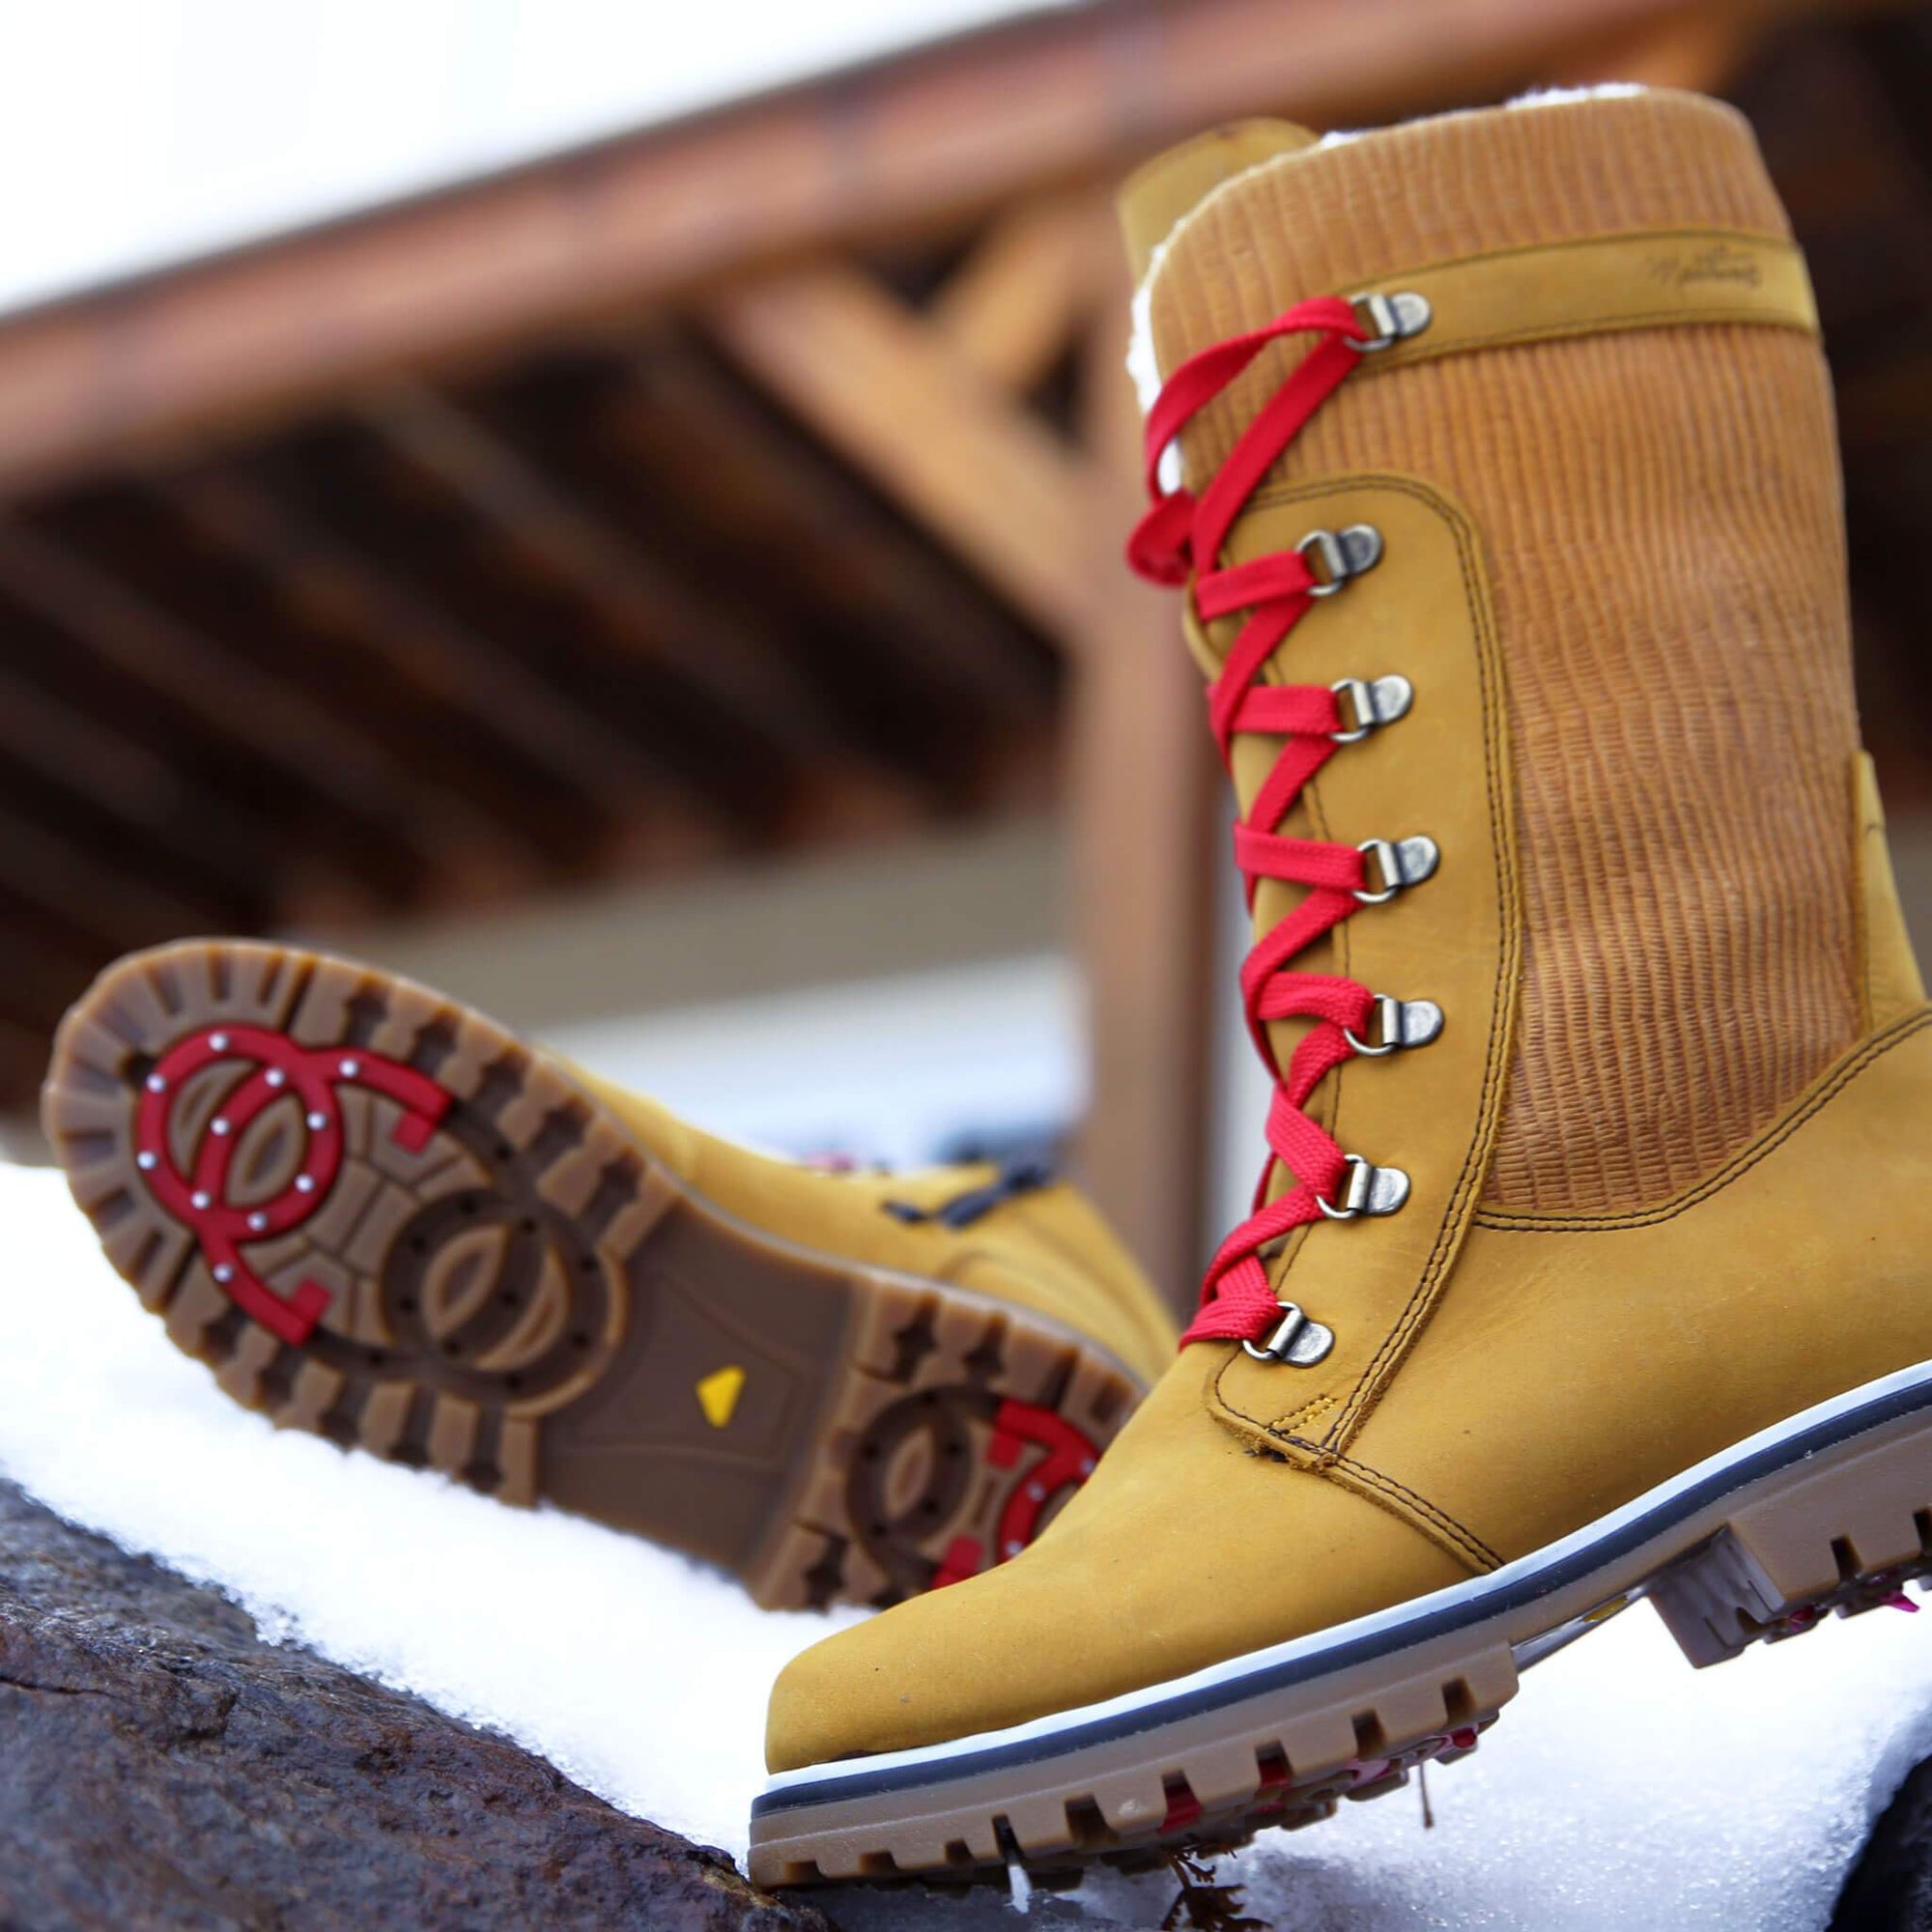 Marlee winter boot for women - Black-croco